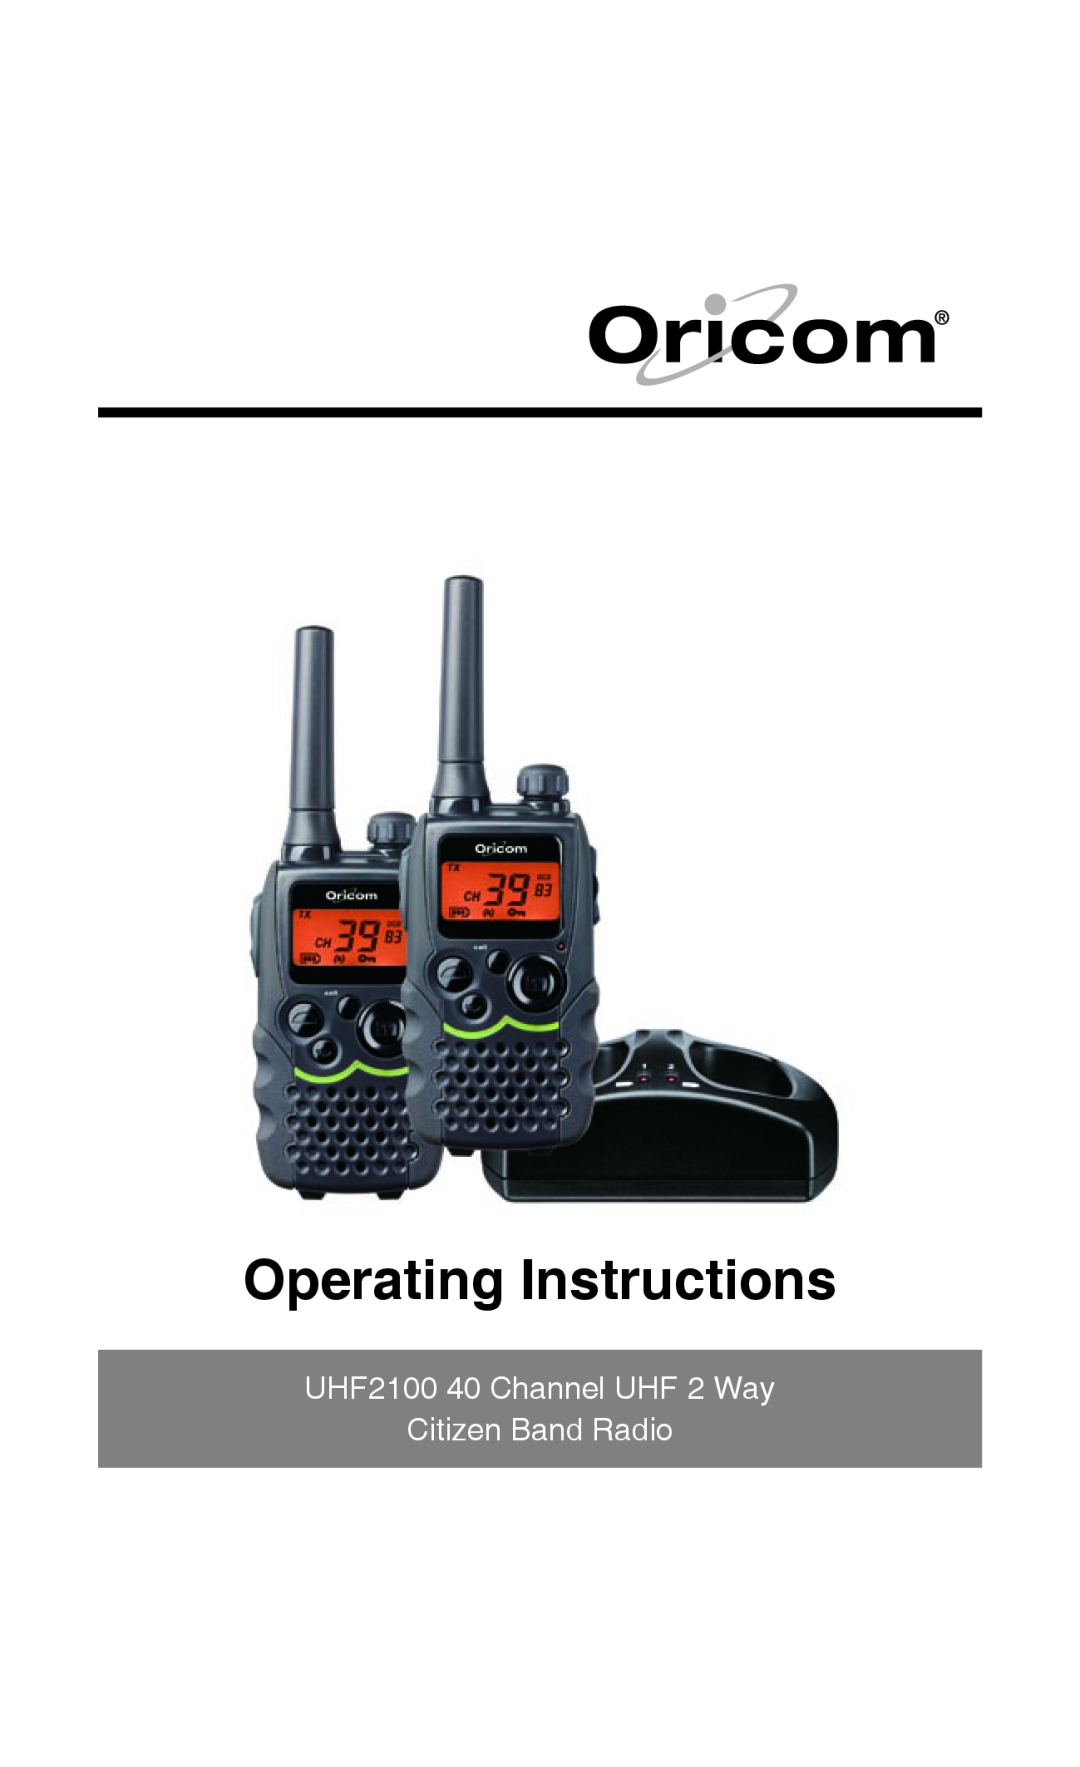 Oricom manual Operating Instructions, UHF2100 40 Channel UHF 2 Way Citizen Band Radio 